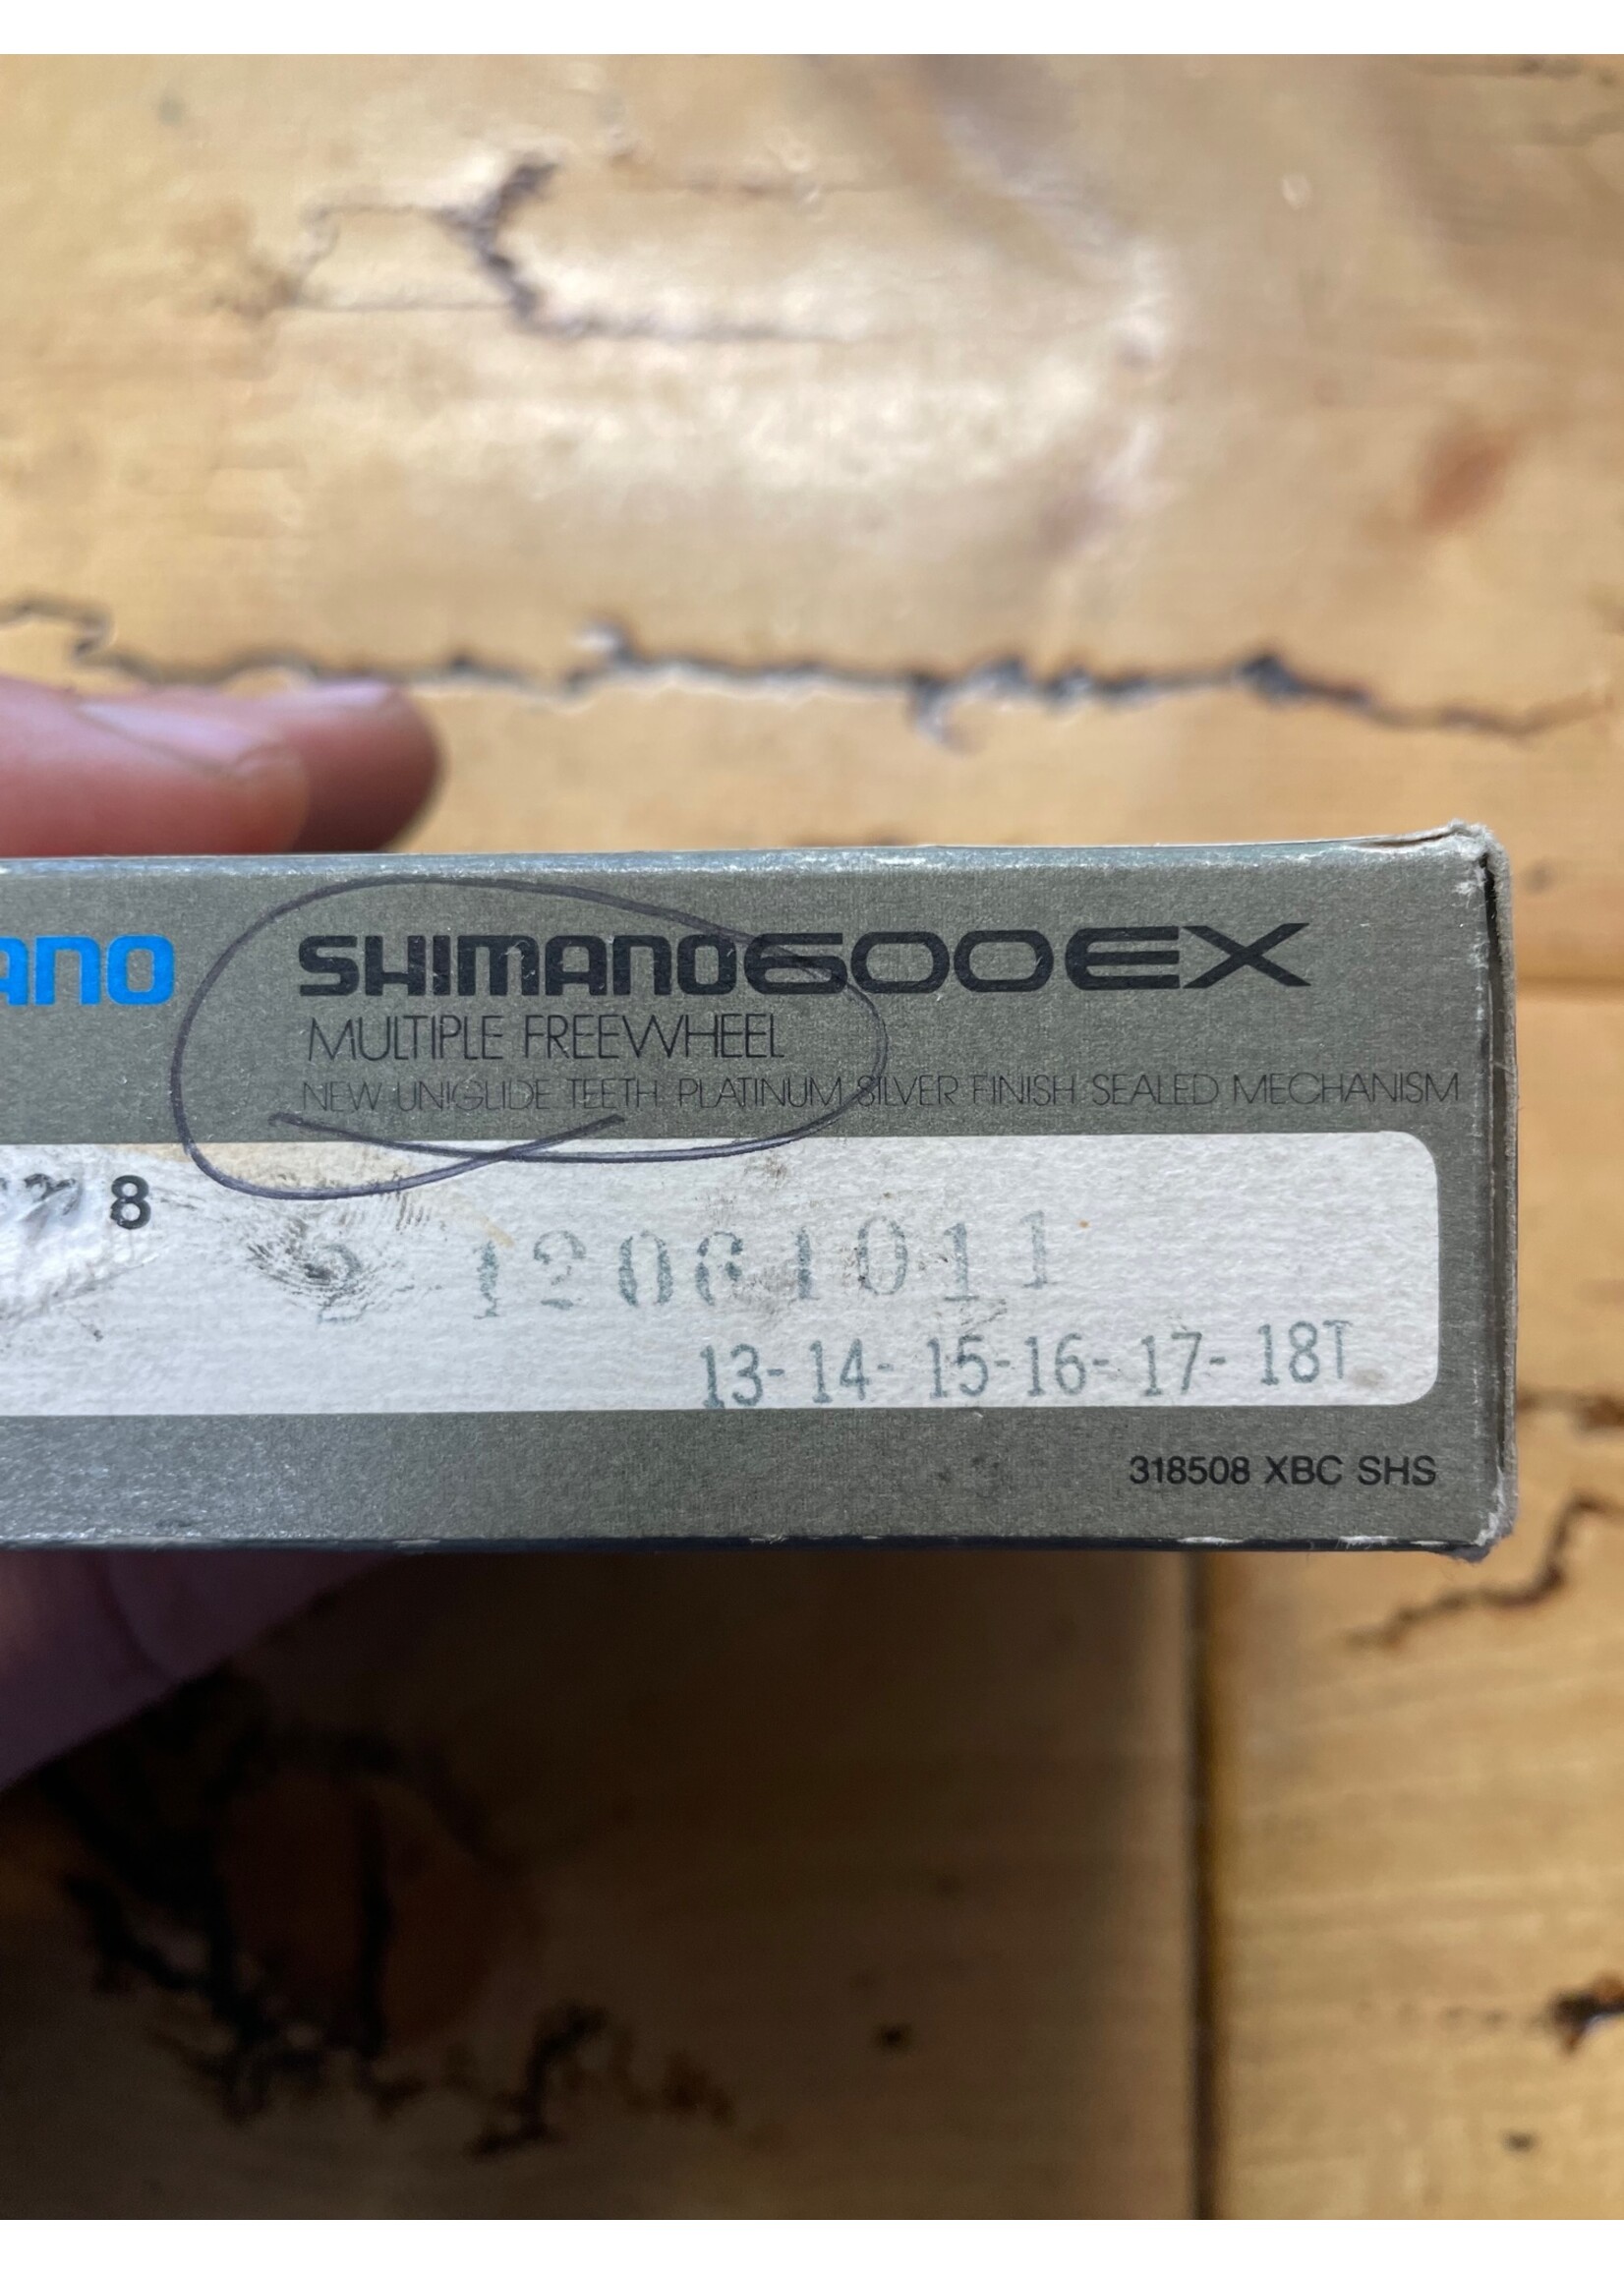 SHIMANO Shimano 600 EX MF-6208 13-18 Freewheel